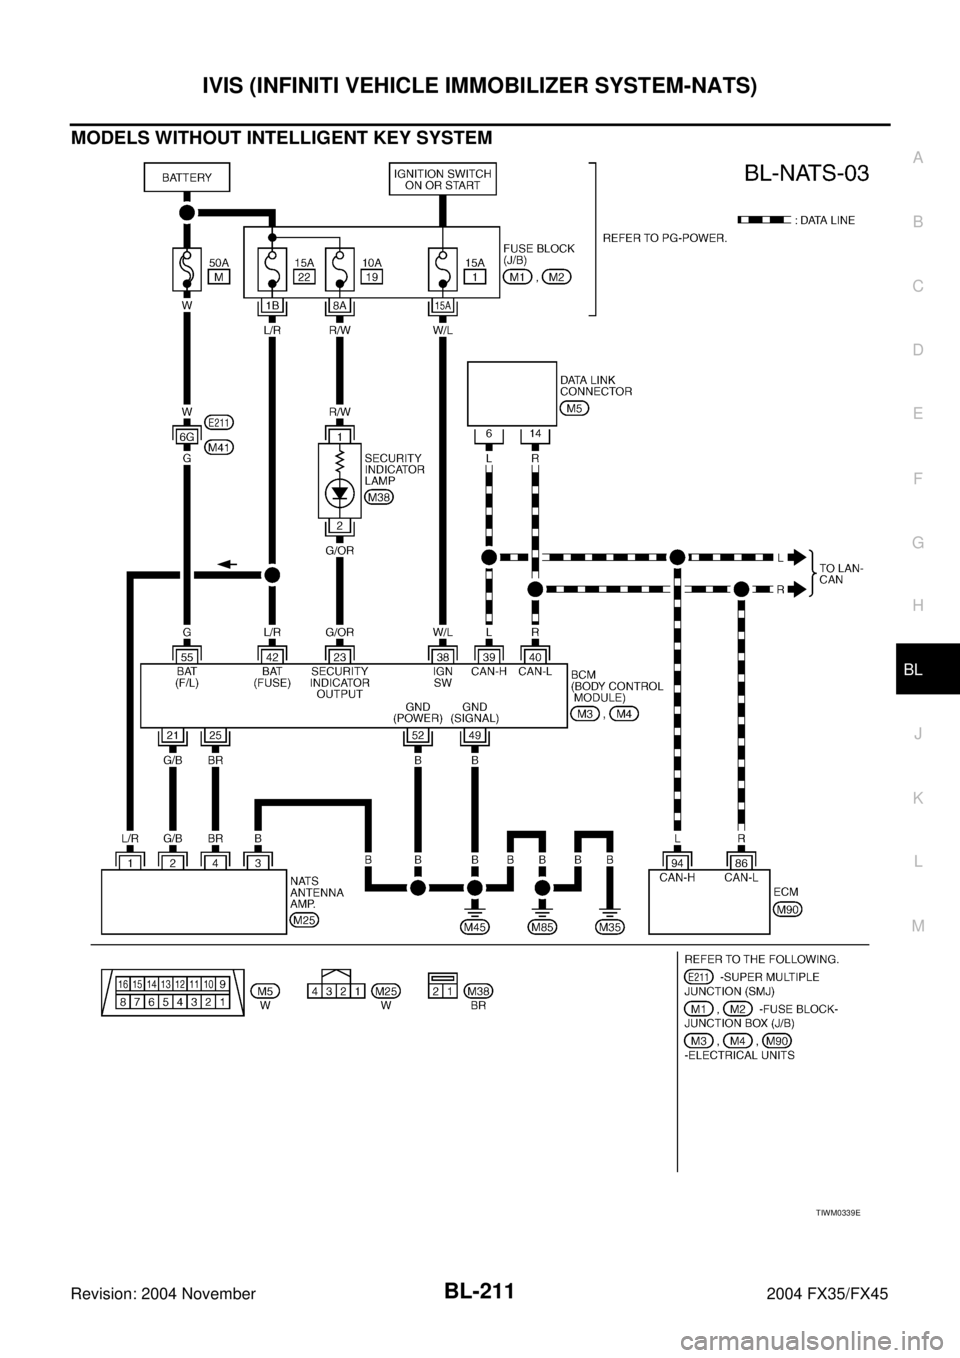 INFINITI FX35 2004  Service Manual IVIS (INFINITI VEHICLE IMMOBILIZER SYSTEM-NATS)
BL-211
C
D
E
F
G
H
J
K
L
MA
B
BL
Revision: 2004 November 2004 FX35/FX45
MODELS WITHOUT INTELLIGENT KEY SYSTEM
TIWM0339E 